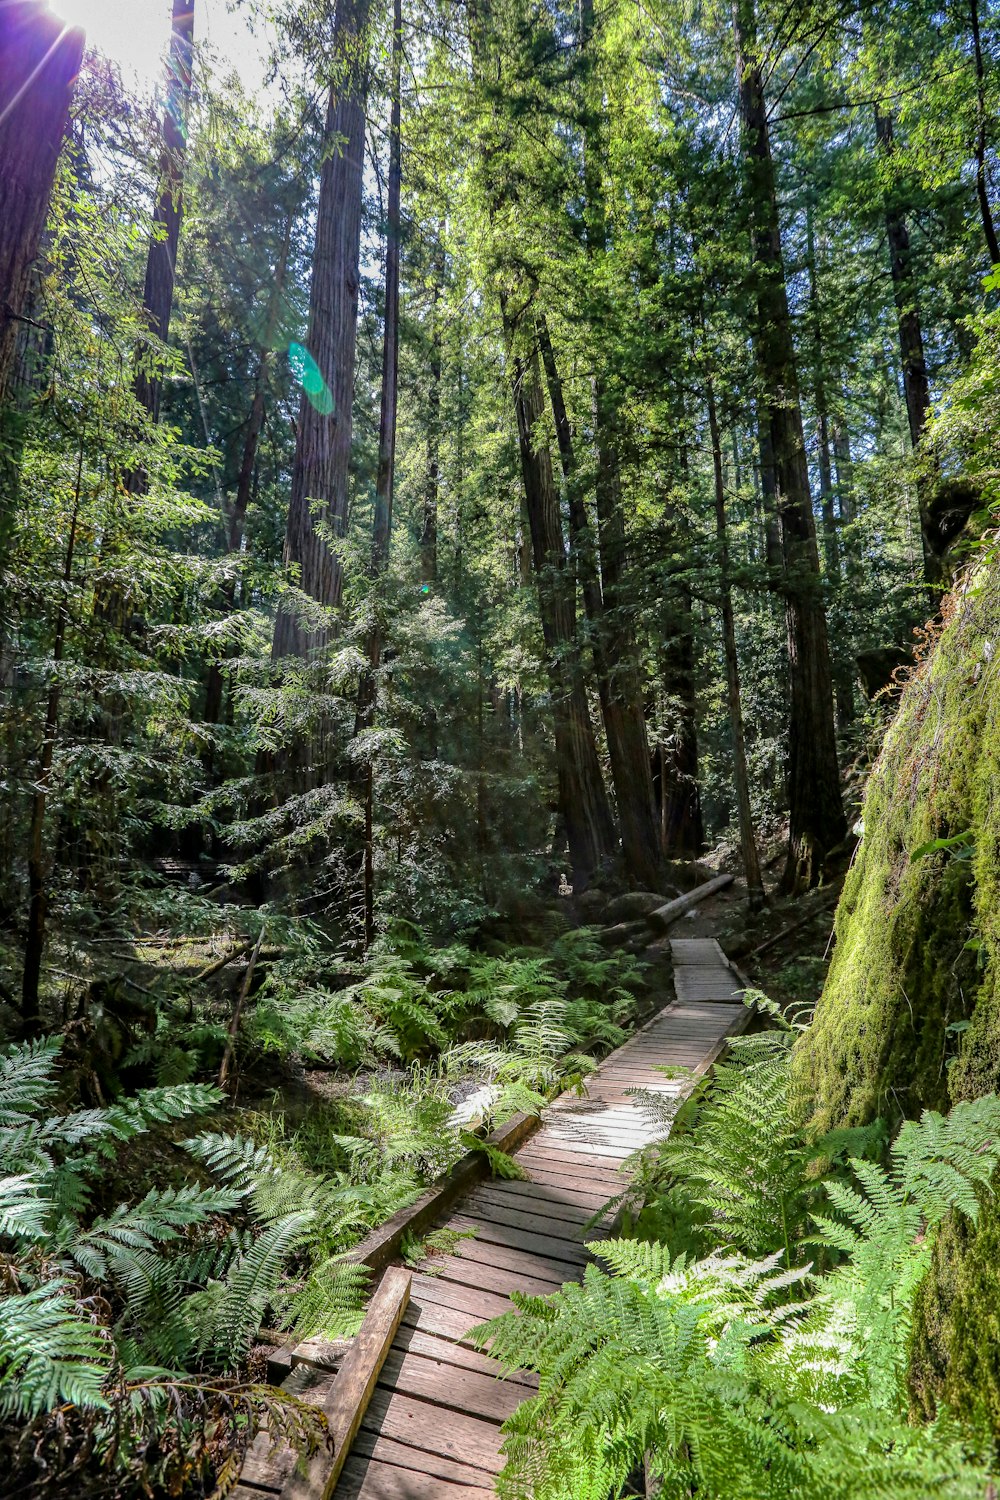 a wooden path through a lush green forest